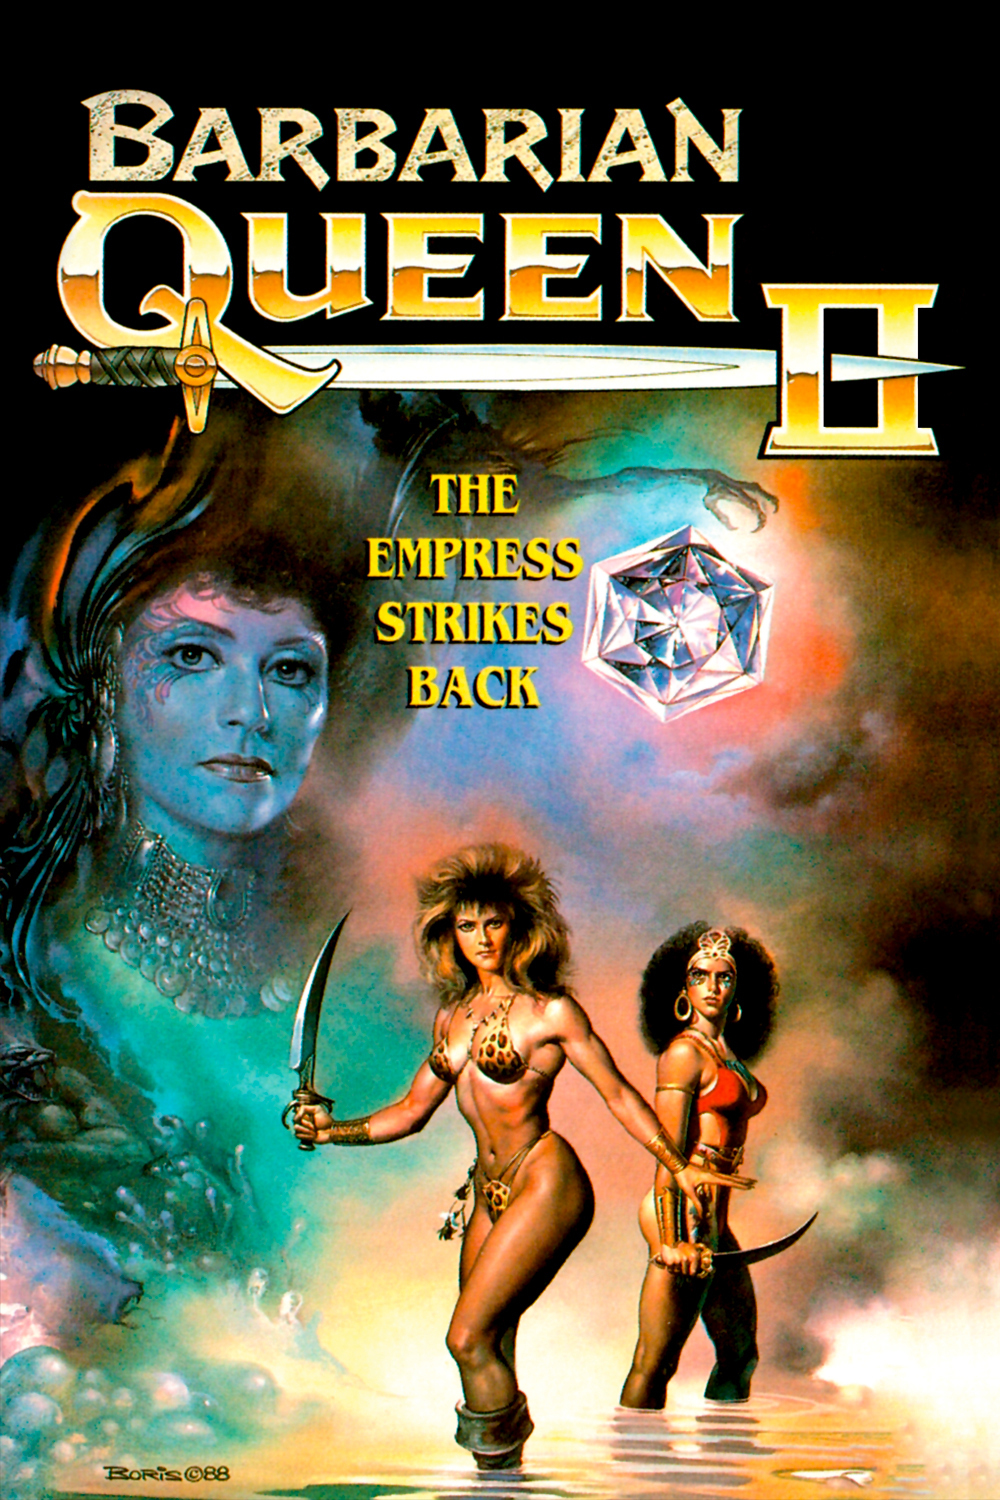 affiche du film Barbarian Queen II: The Empress Strikes Back